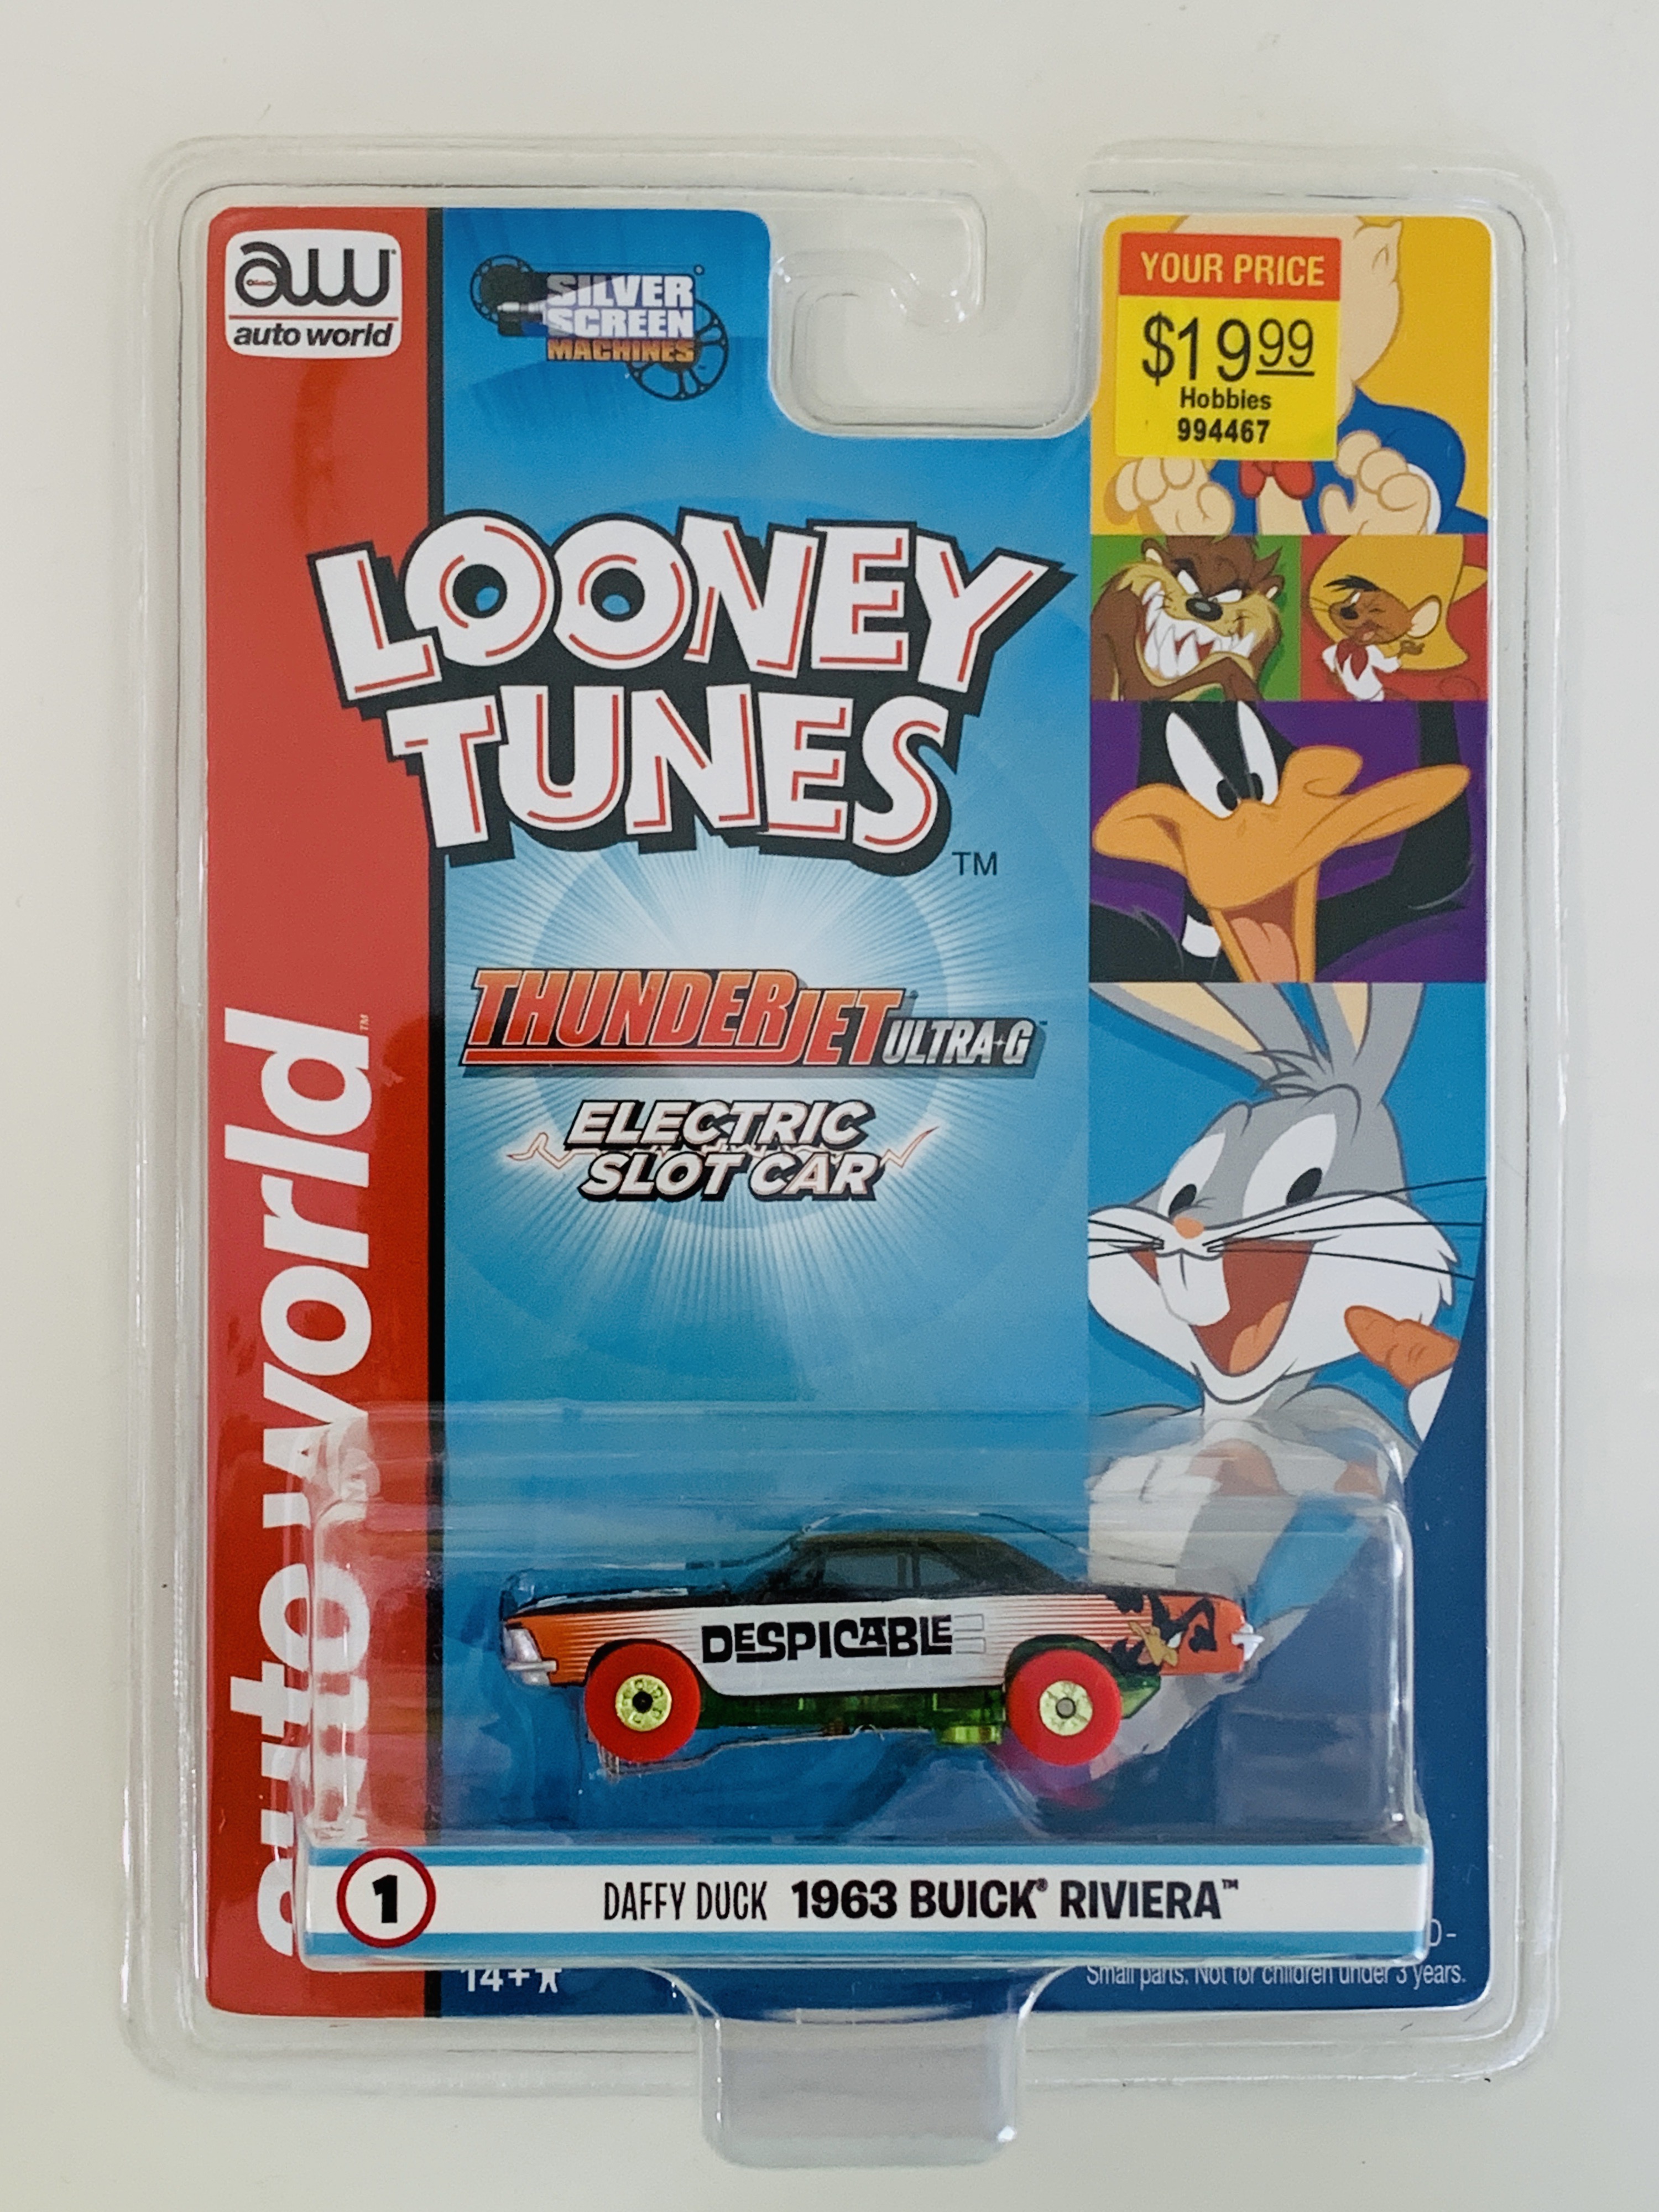 Auto World Looney Tunes Daffy Duck 1963 Buick Riviera Slot Car